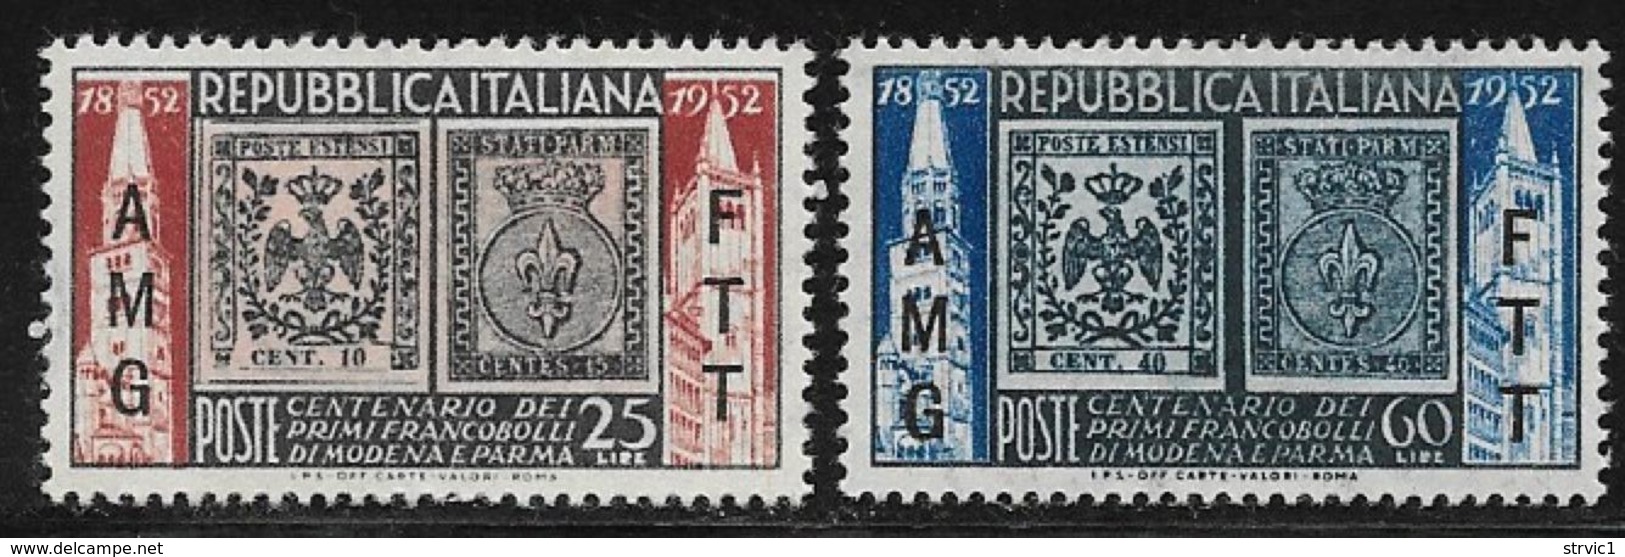 Trieste Zone A, Scott # 146-7 MNH Italy #602-3 Overprinted, 1952 - Neufs